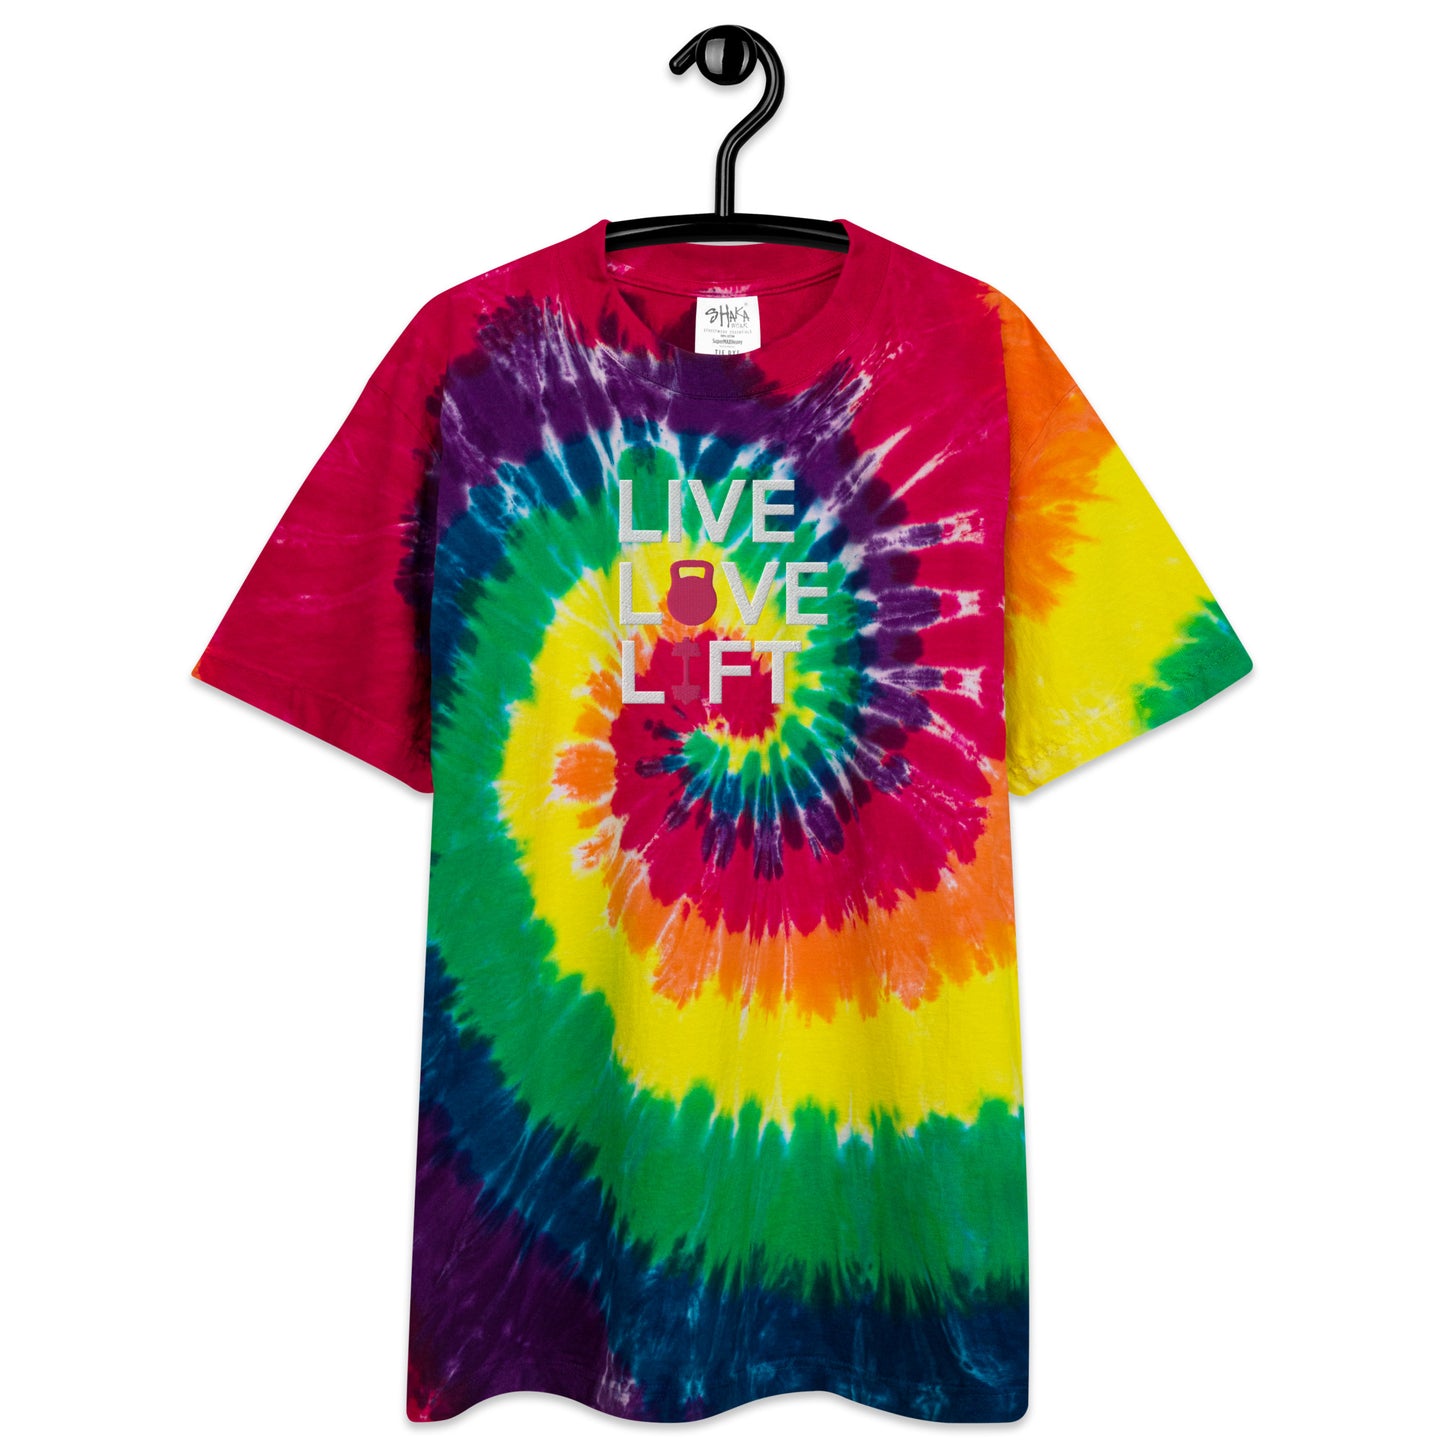 Oversized Live Love Lift tie-dye t-shirt